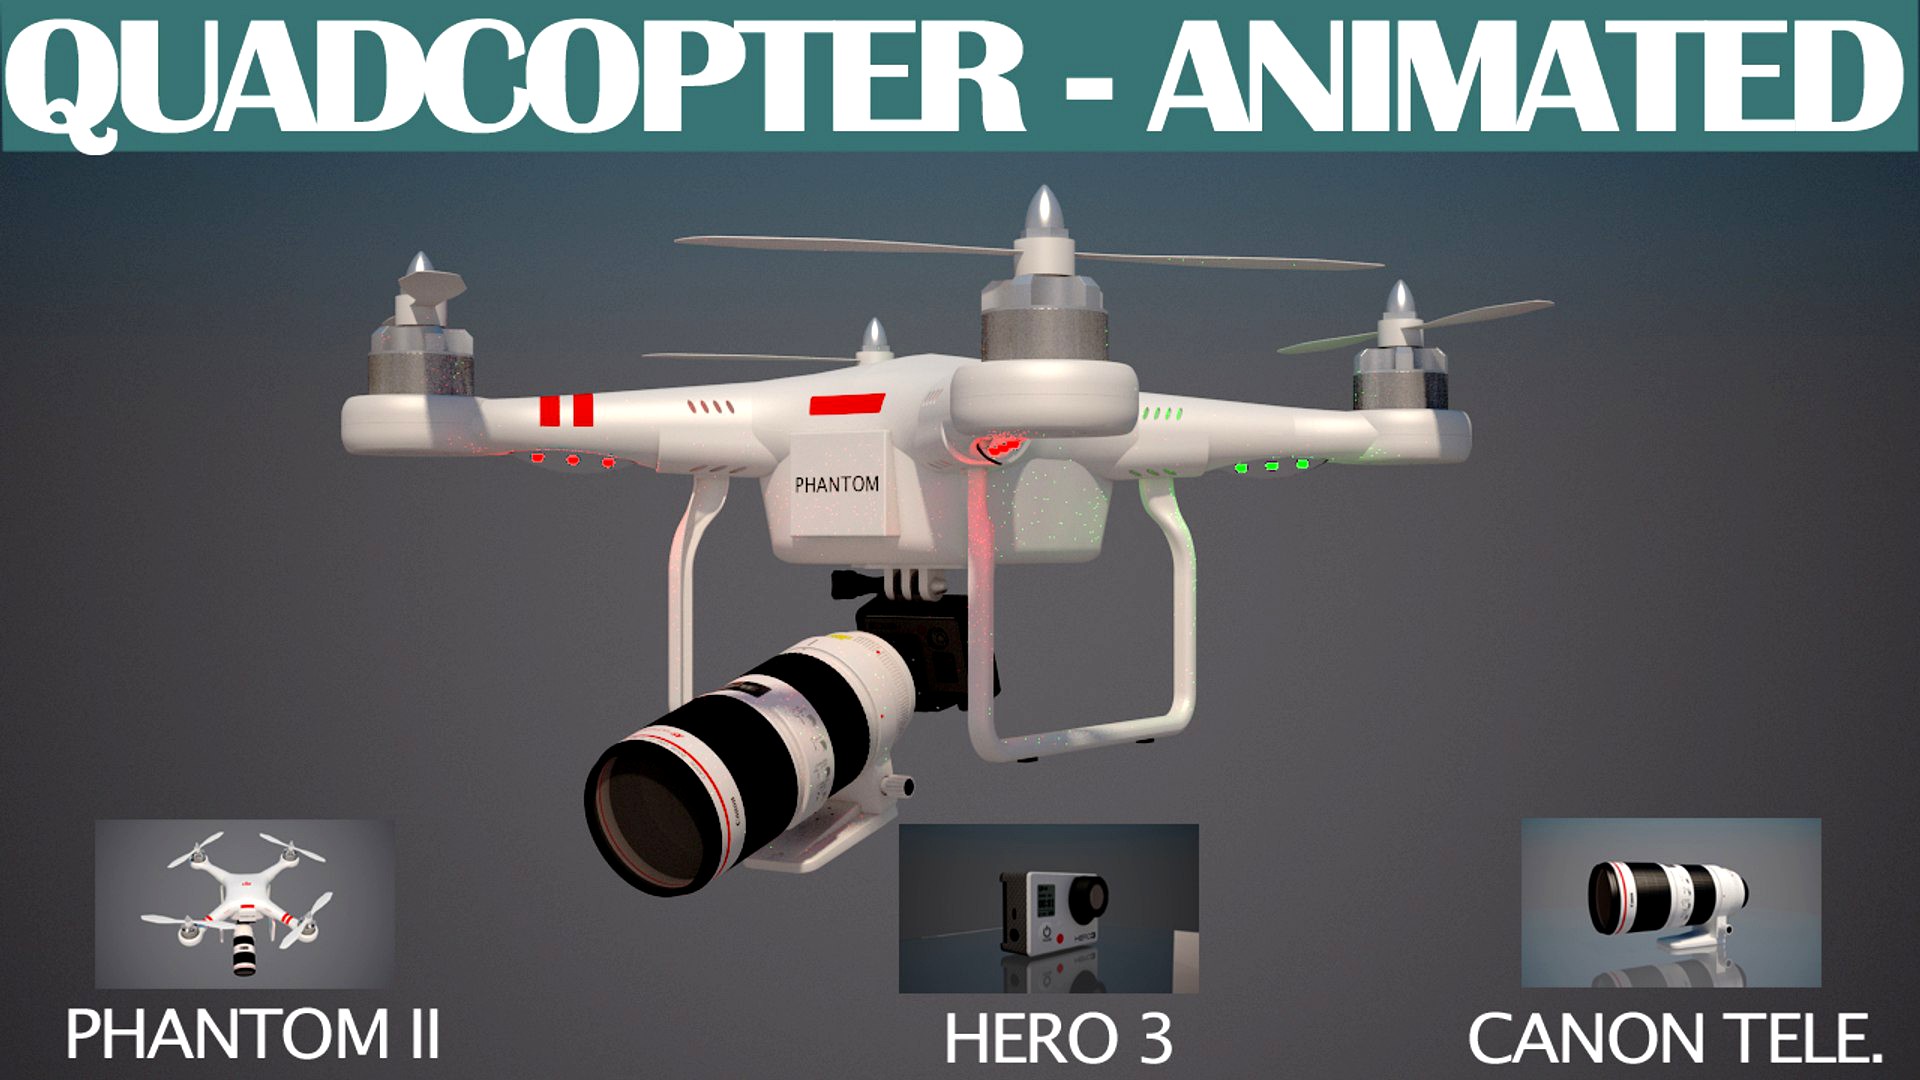 Quadcopter Animated.